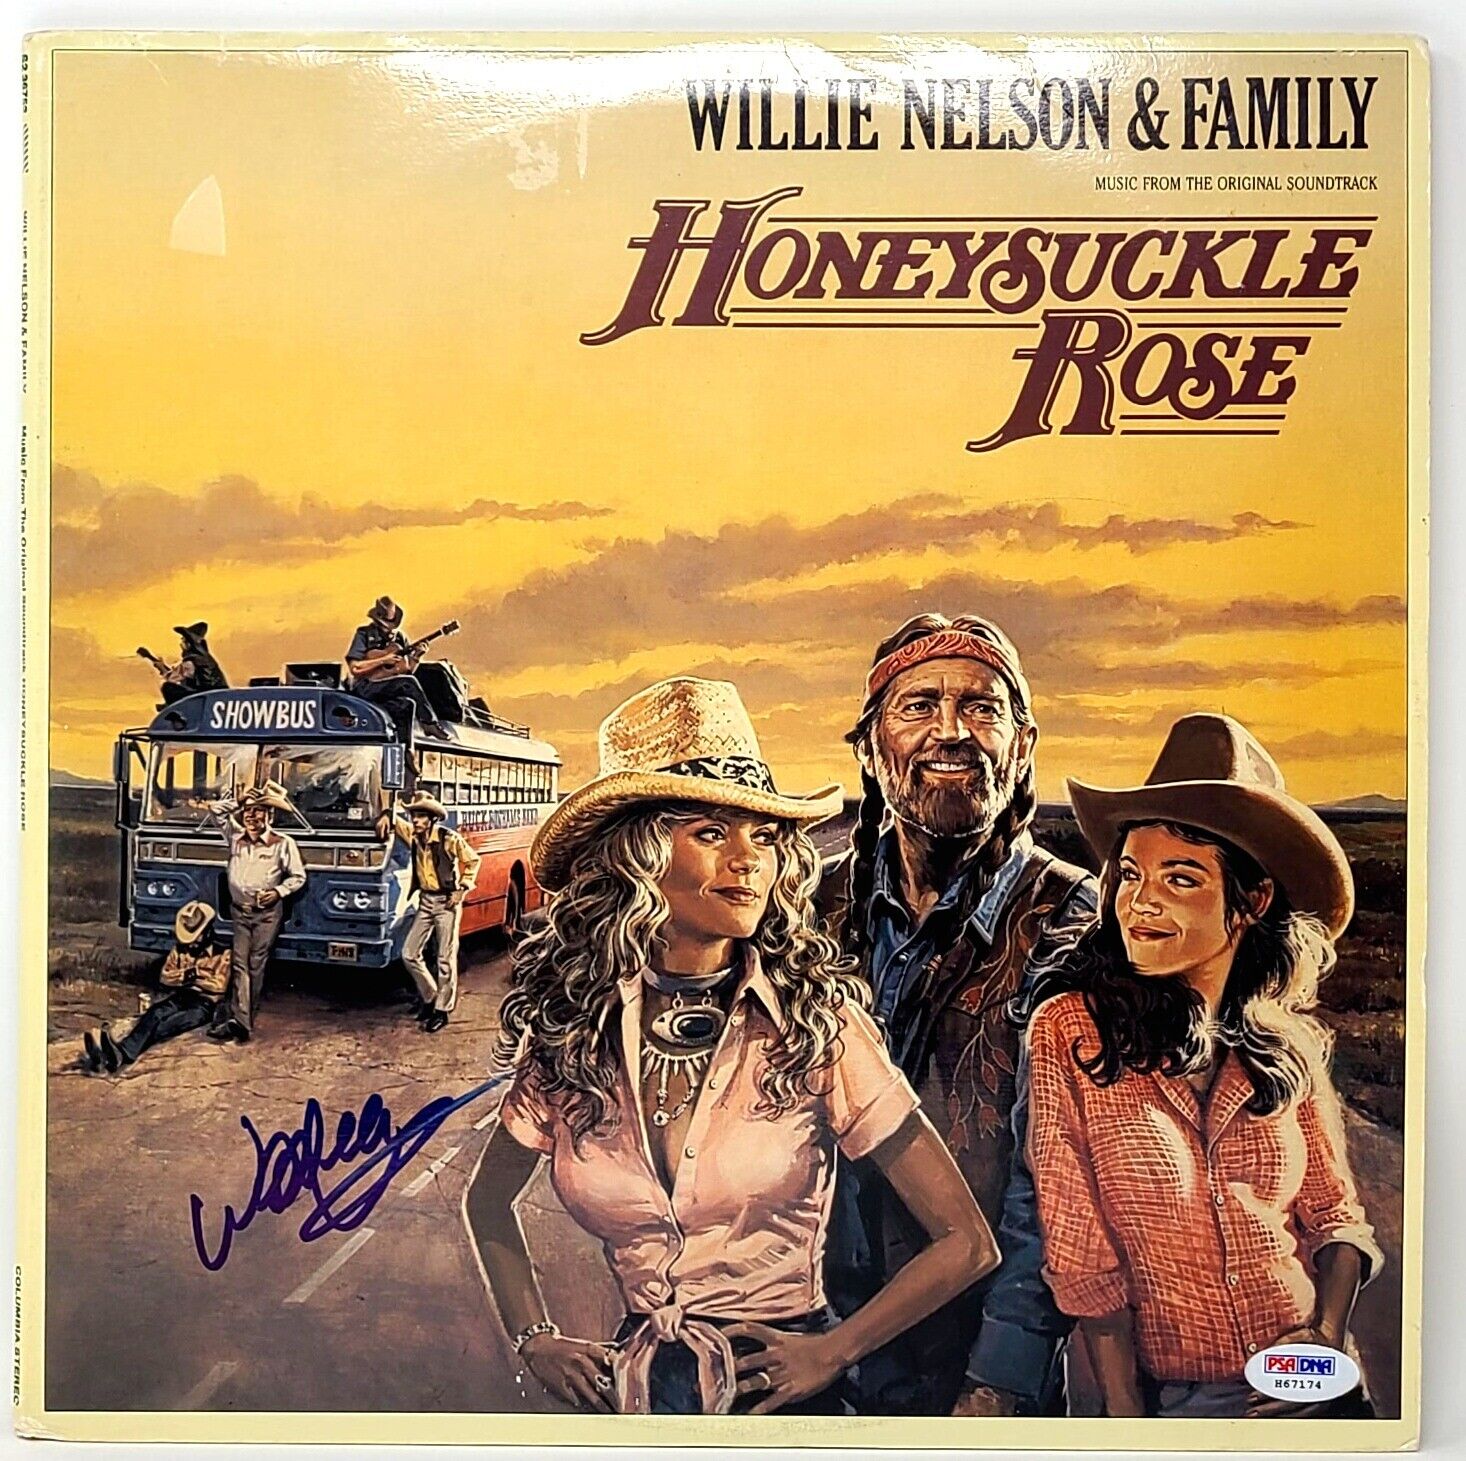 WILLIE NELSON Signed Autographed Honeysuckle Rose Album LP w/ Vinyl PSA/DNA